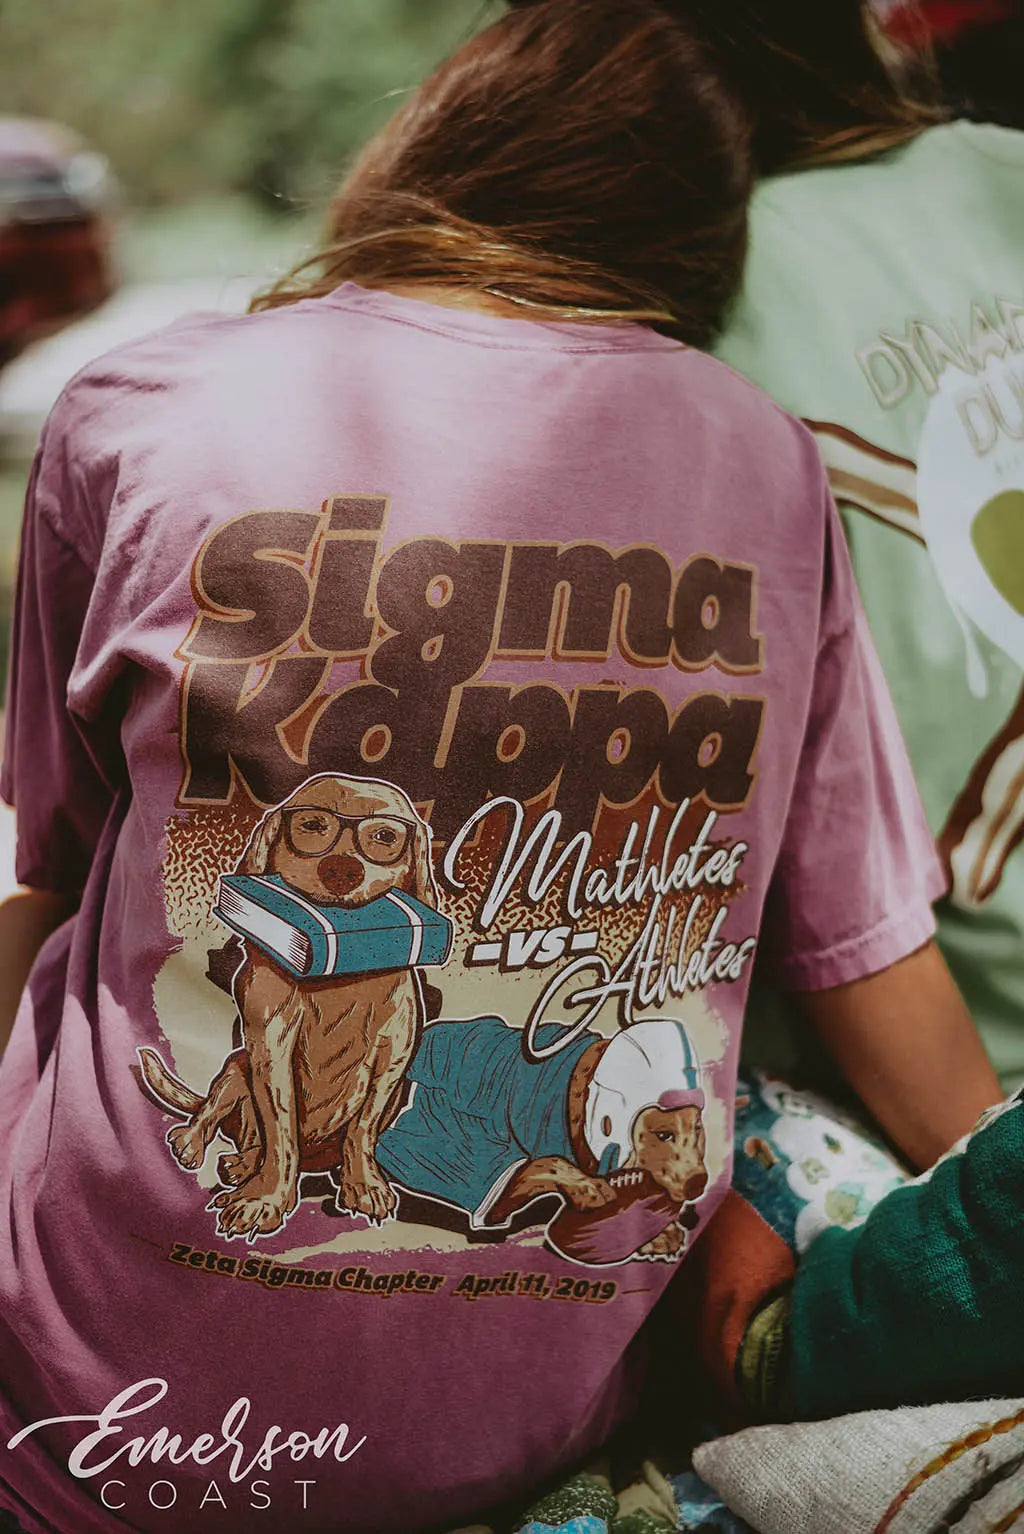 Sigma Kappa Mathletes vs. Athletes T-shirt